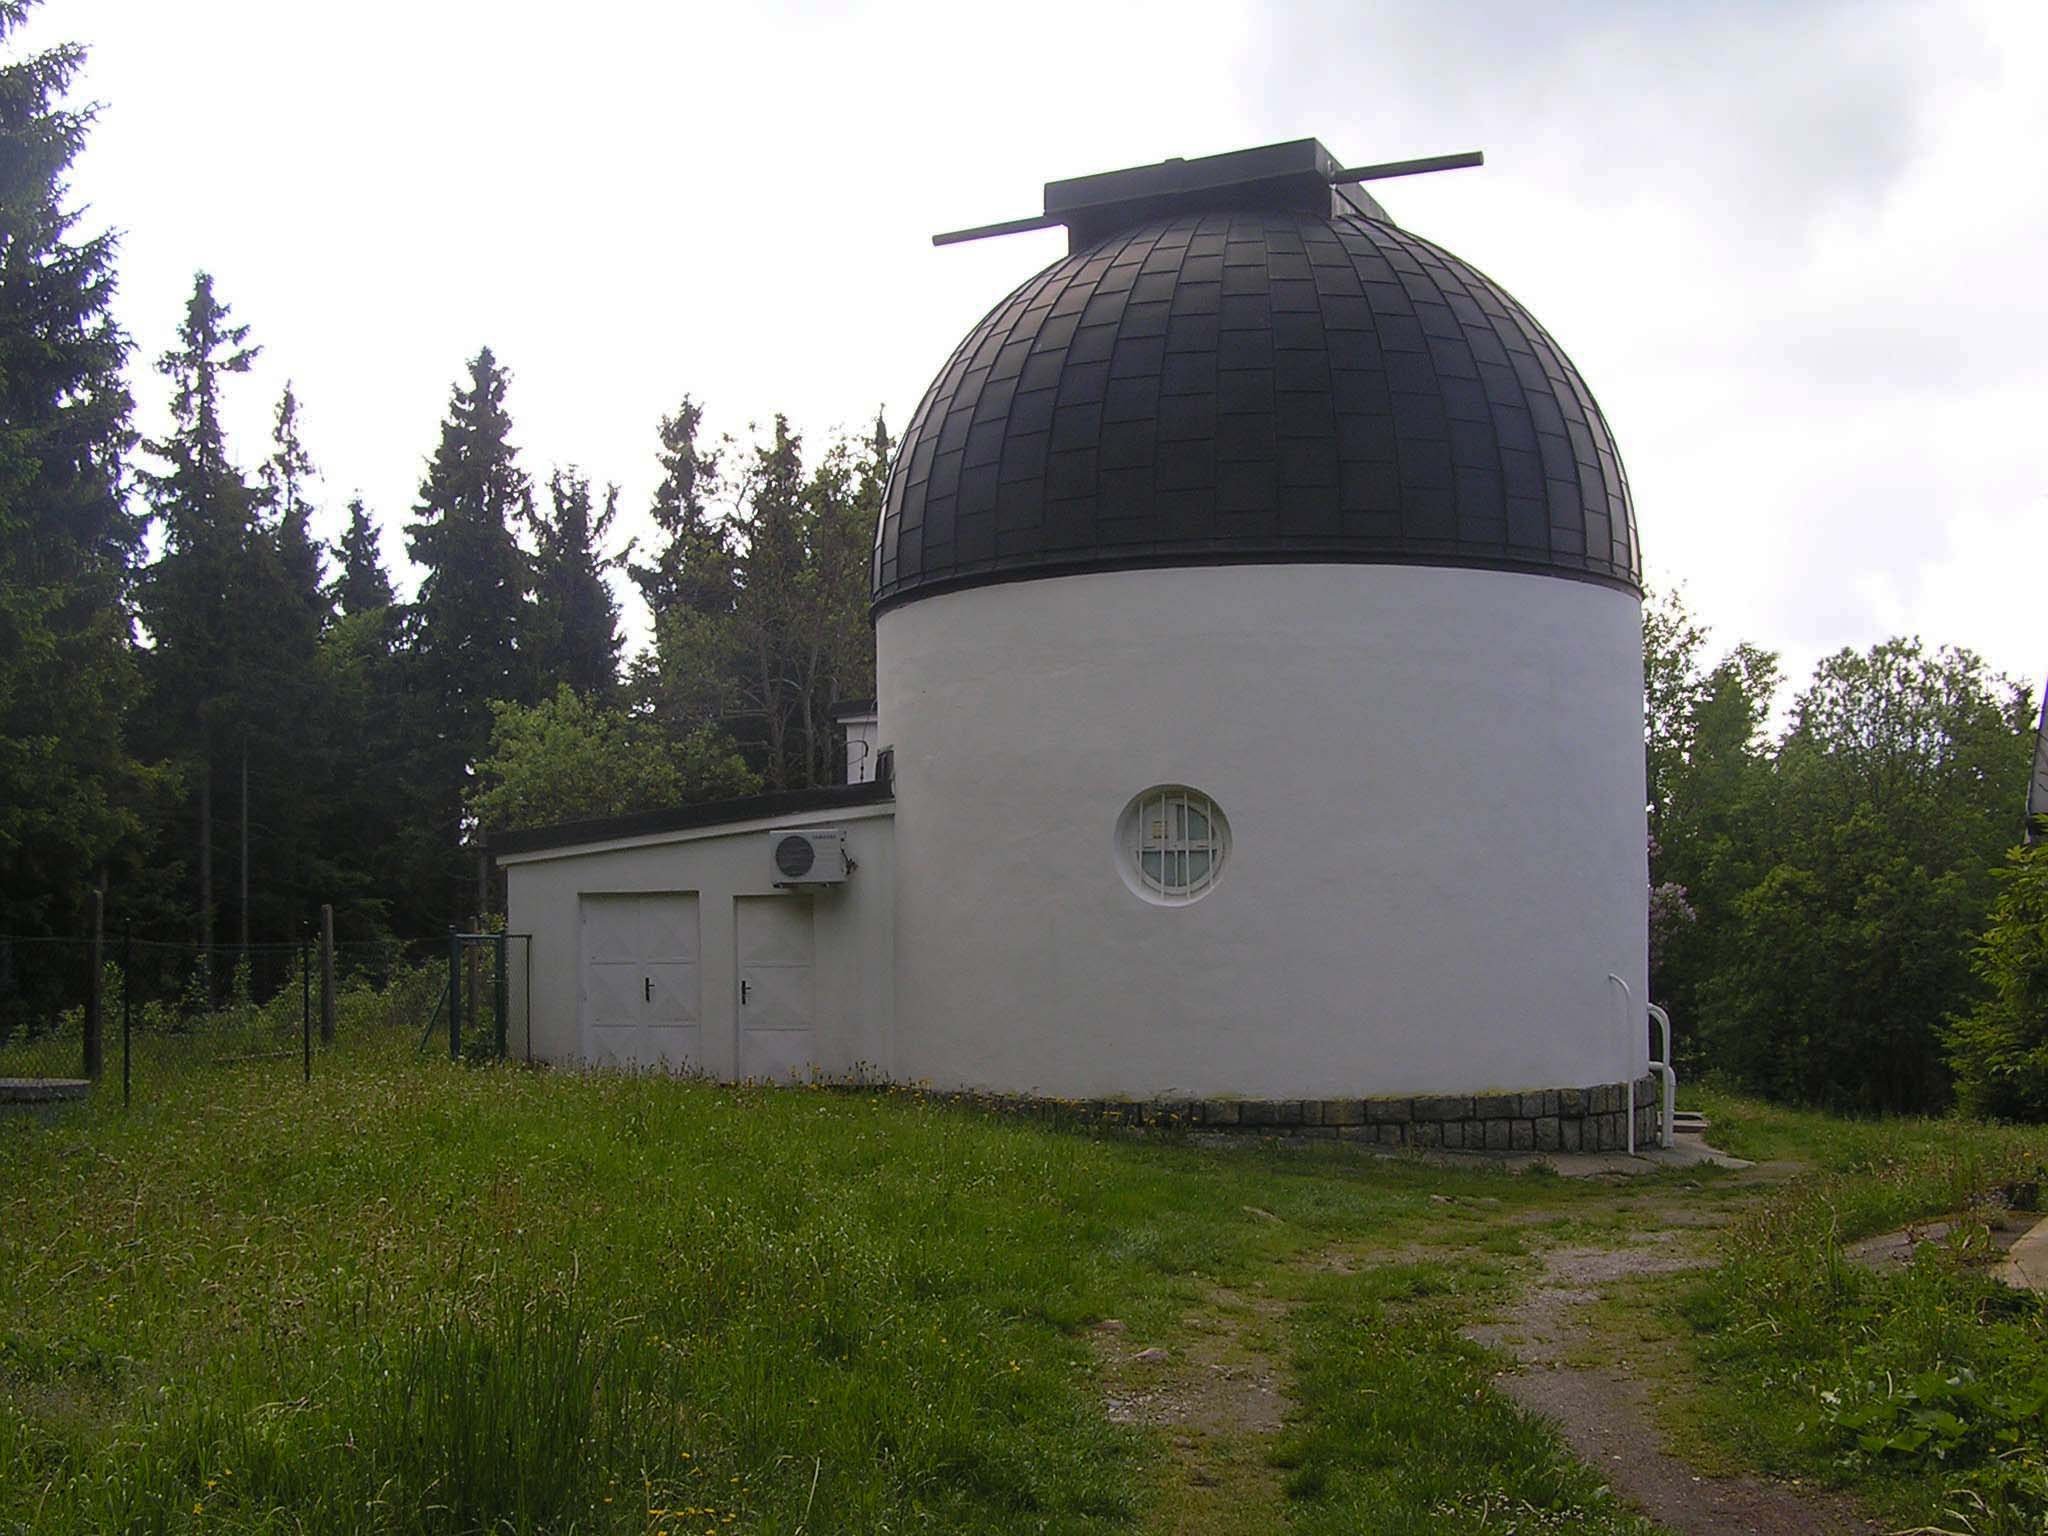 Plzenski observatorij